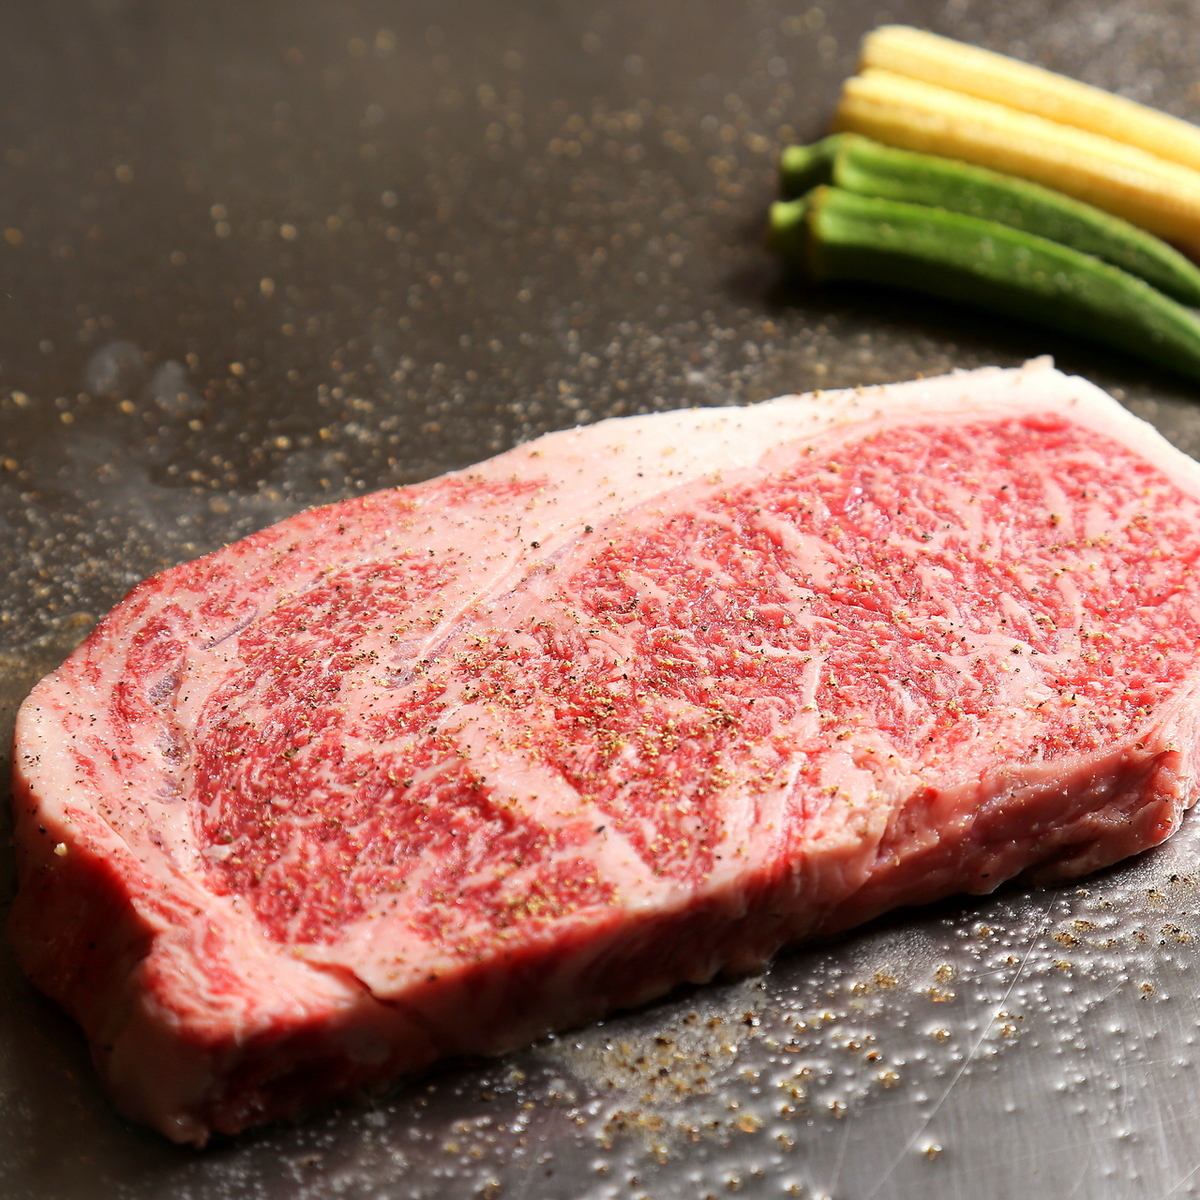 Ahige 的所有肉都是严格挑选的广岛 A4 和牛。